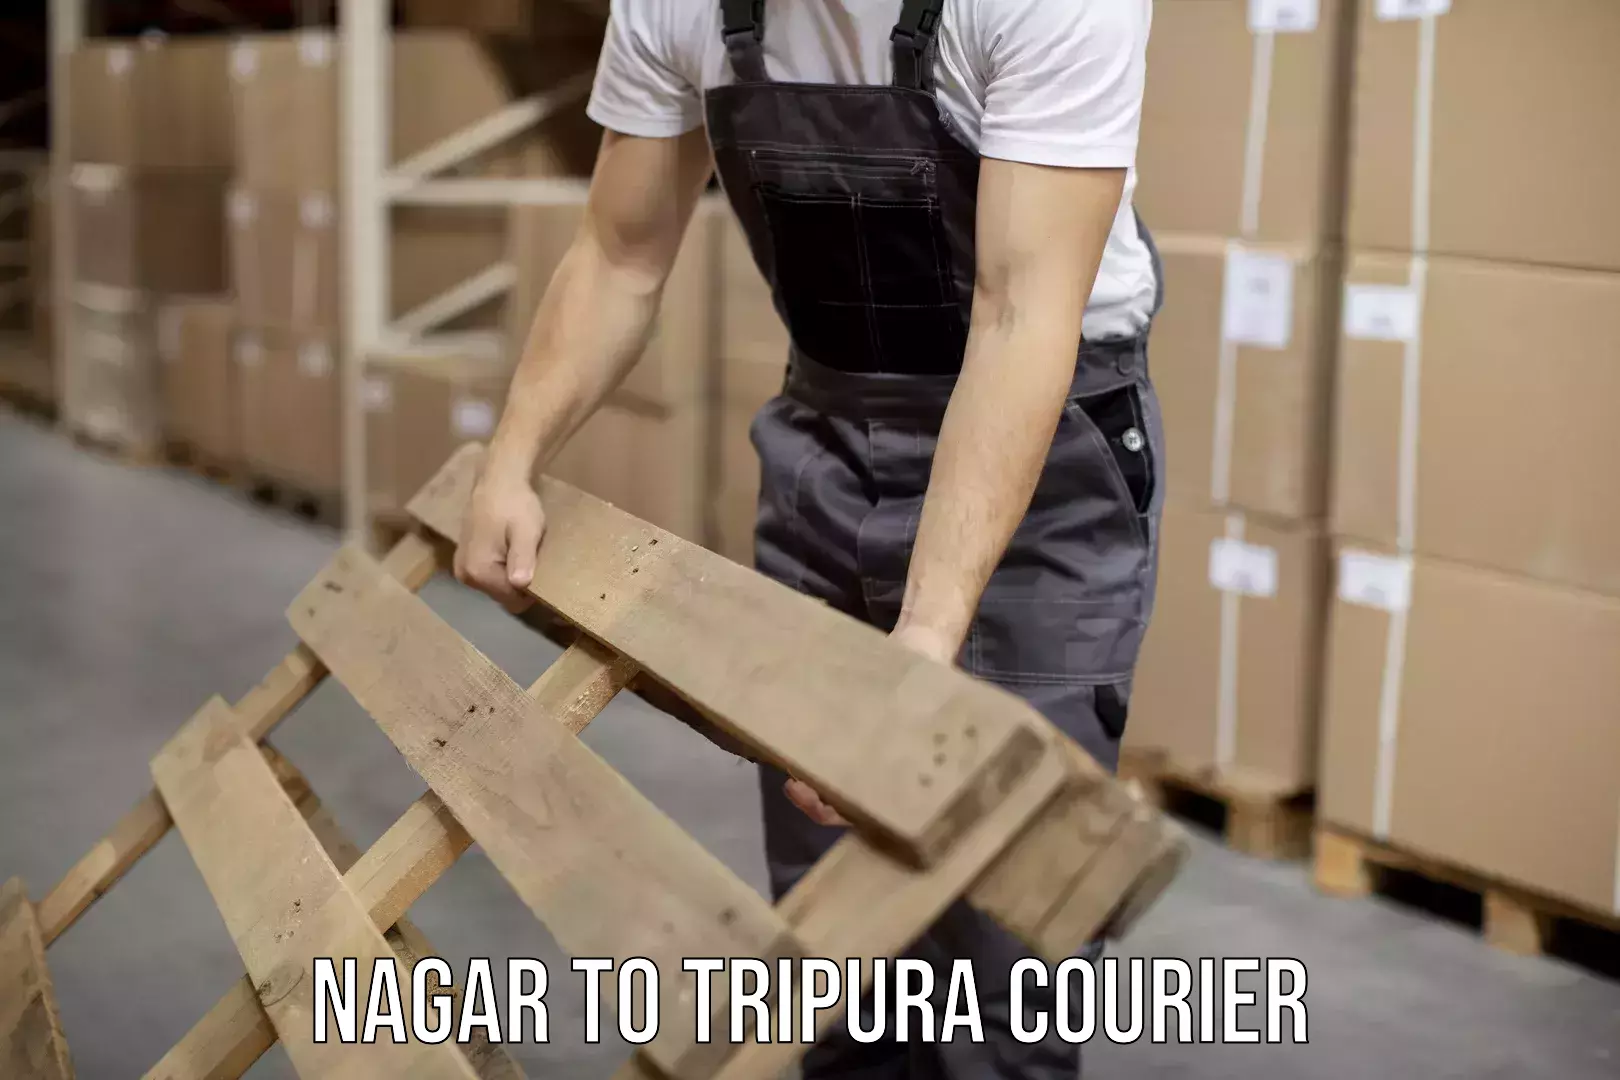 Courier service comparison Nagar to Udaipur Tripura